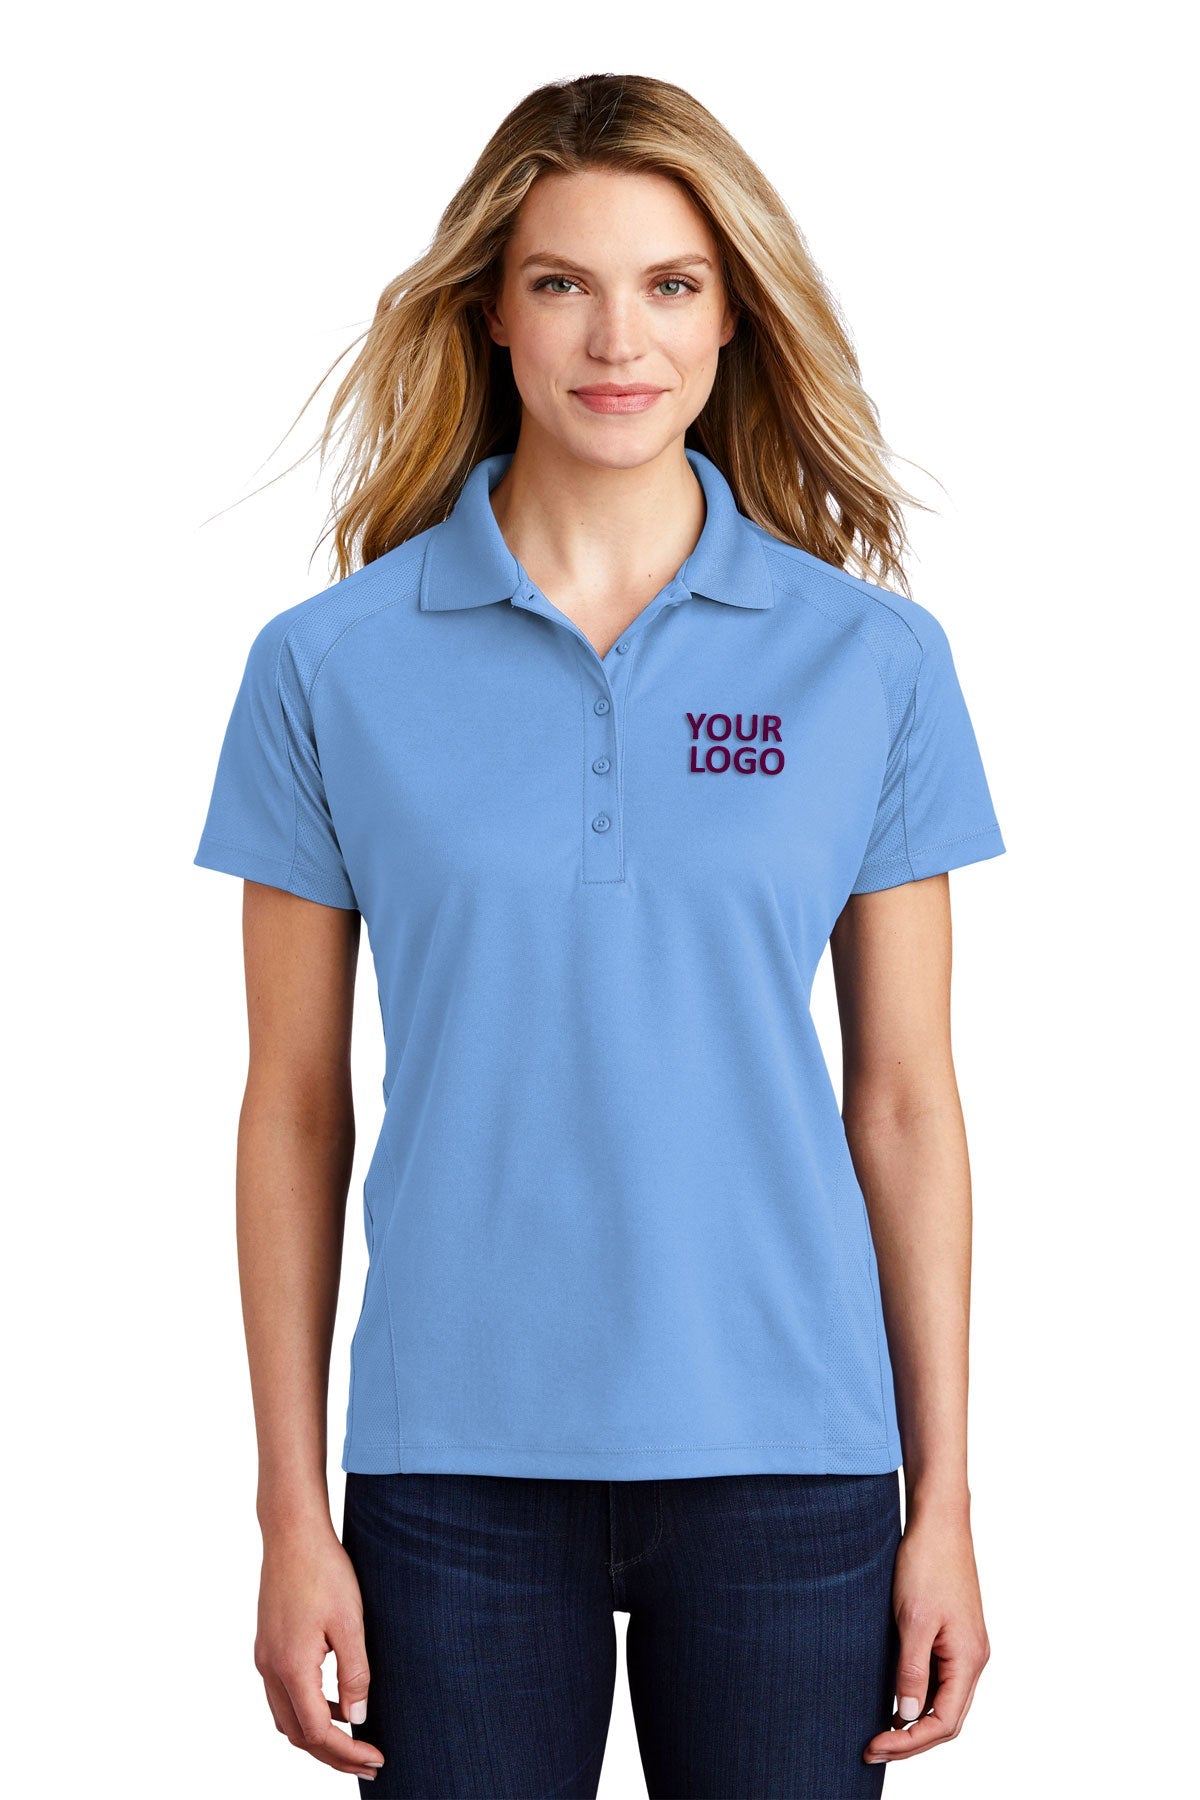 Sport-Tek Carolina Blue L474 custom women's polo shirts